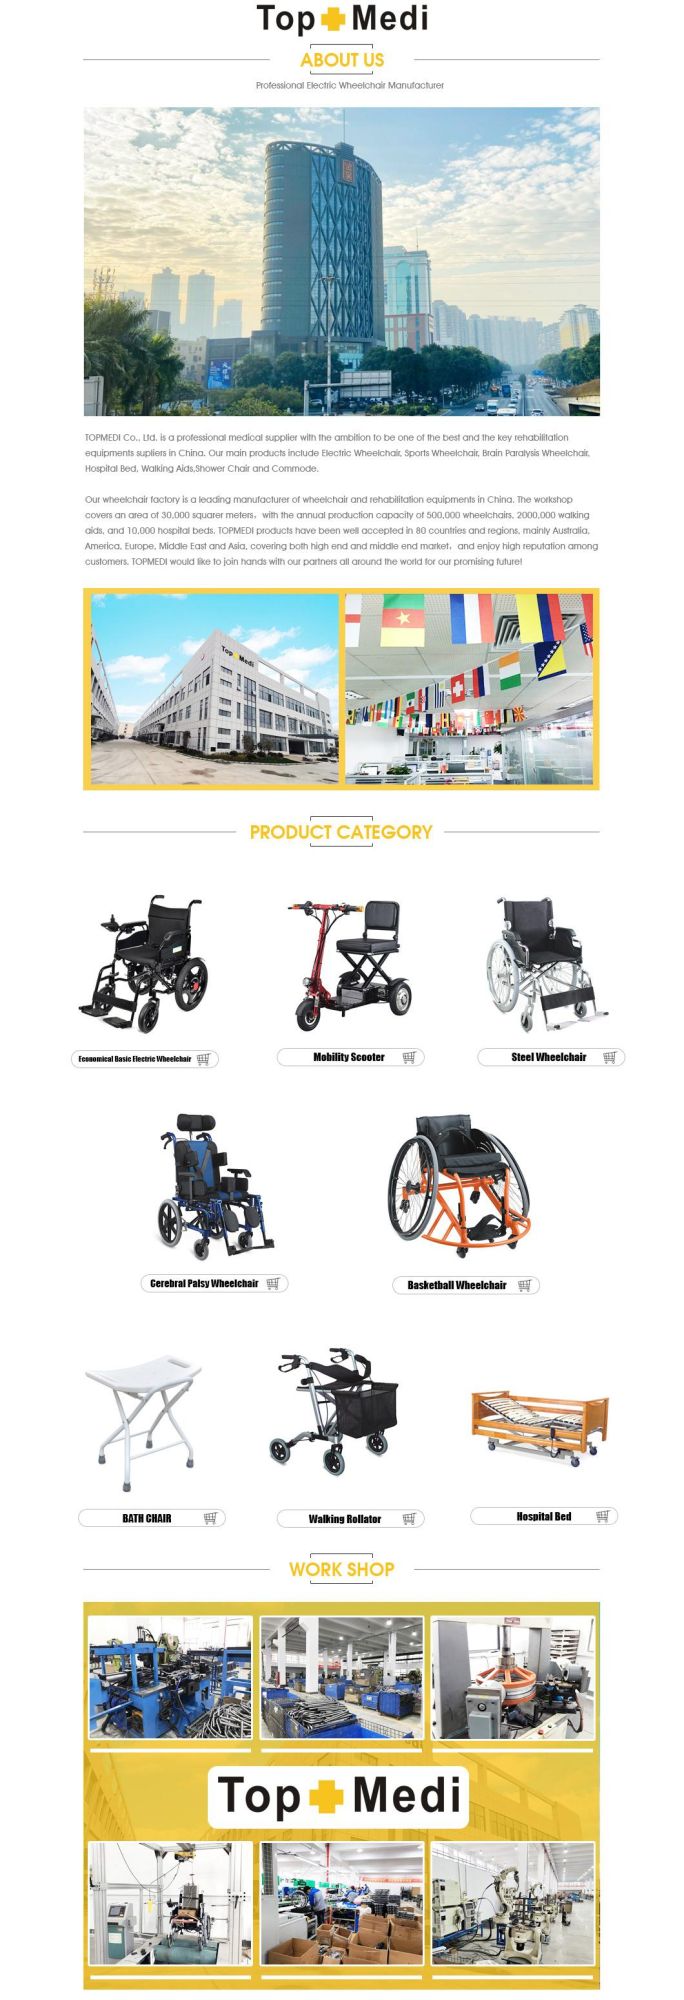 Economic Folding Manual Wheelchair with Chrome Frame